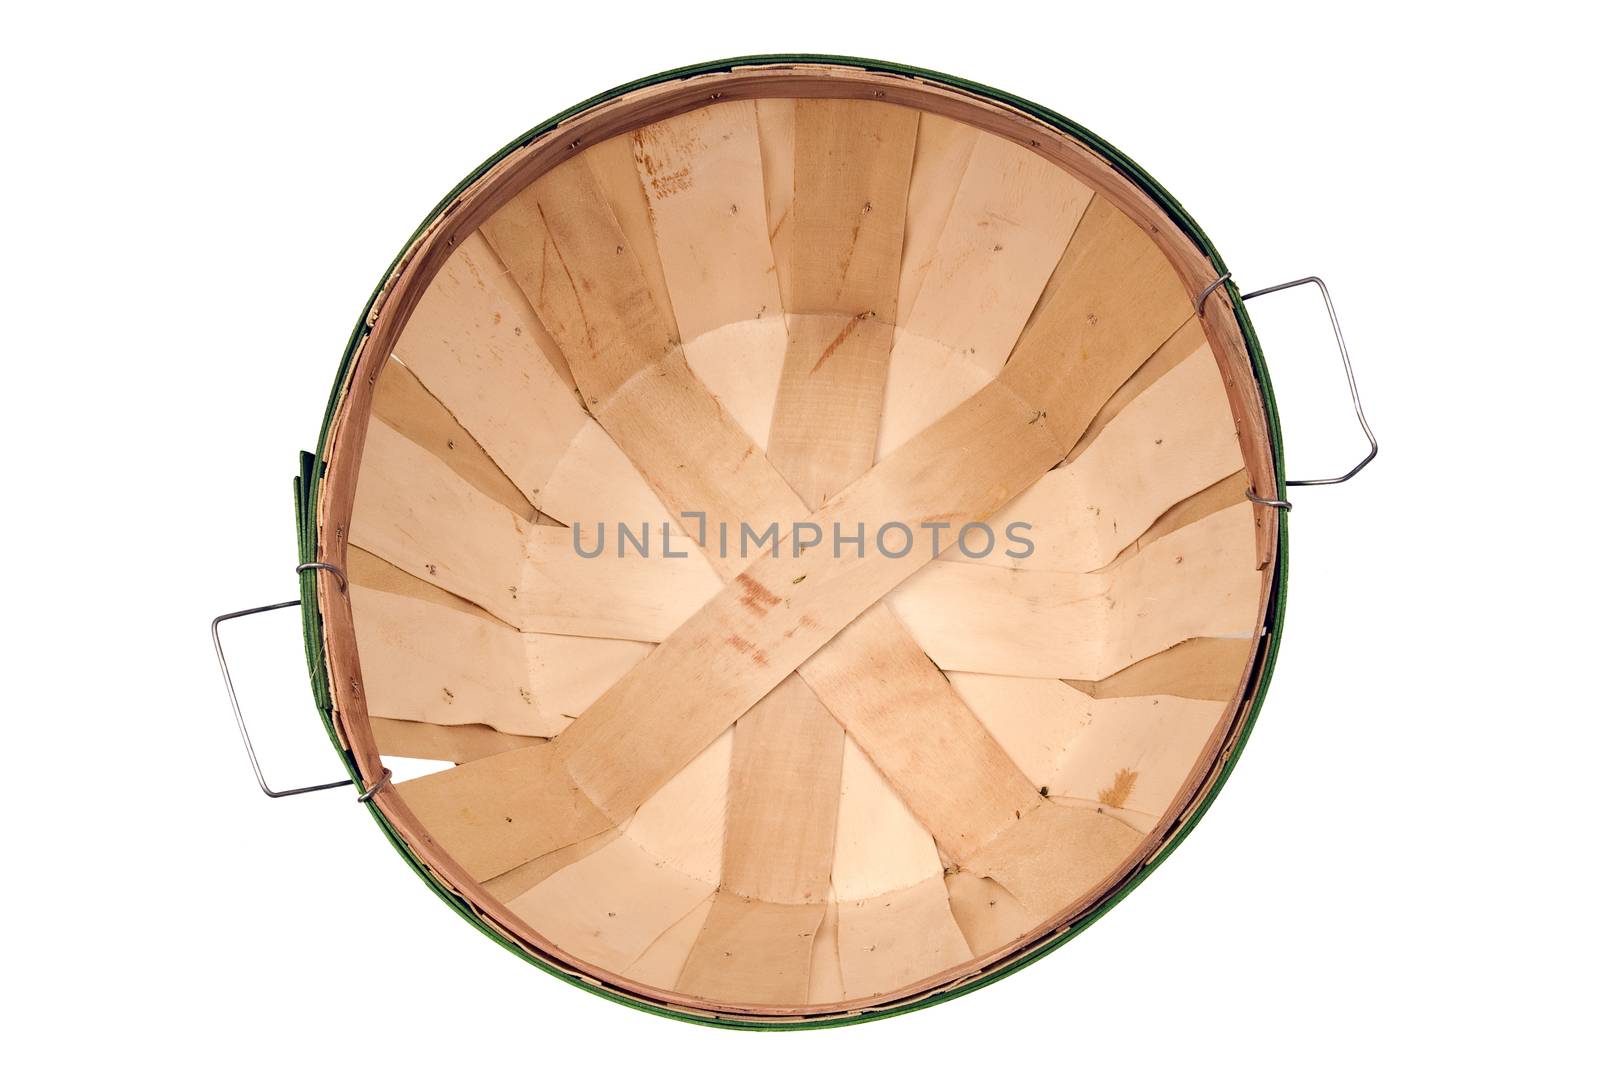 Empty Bushel Basket Shot From Above by stockbuster1